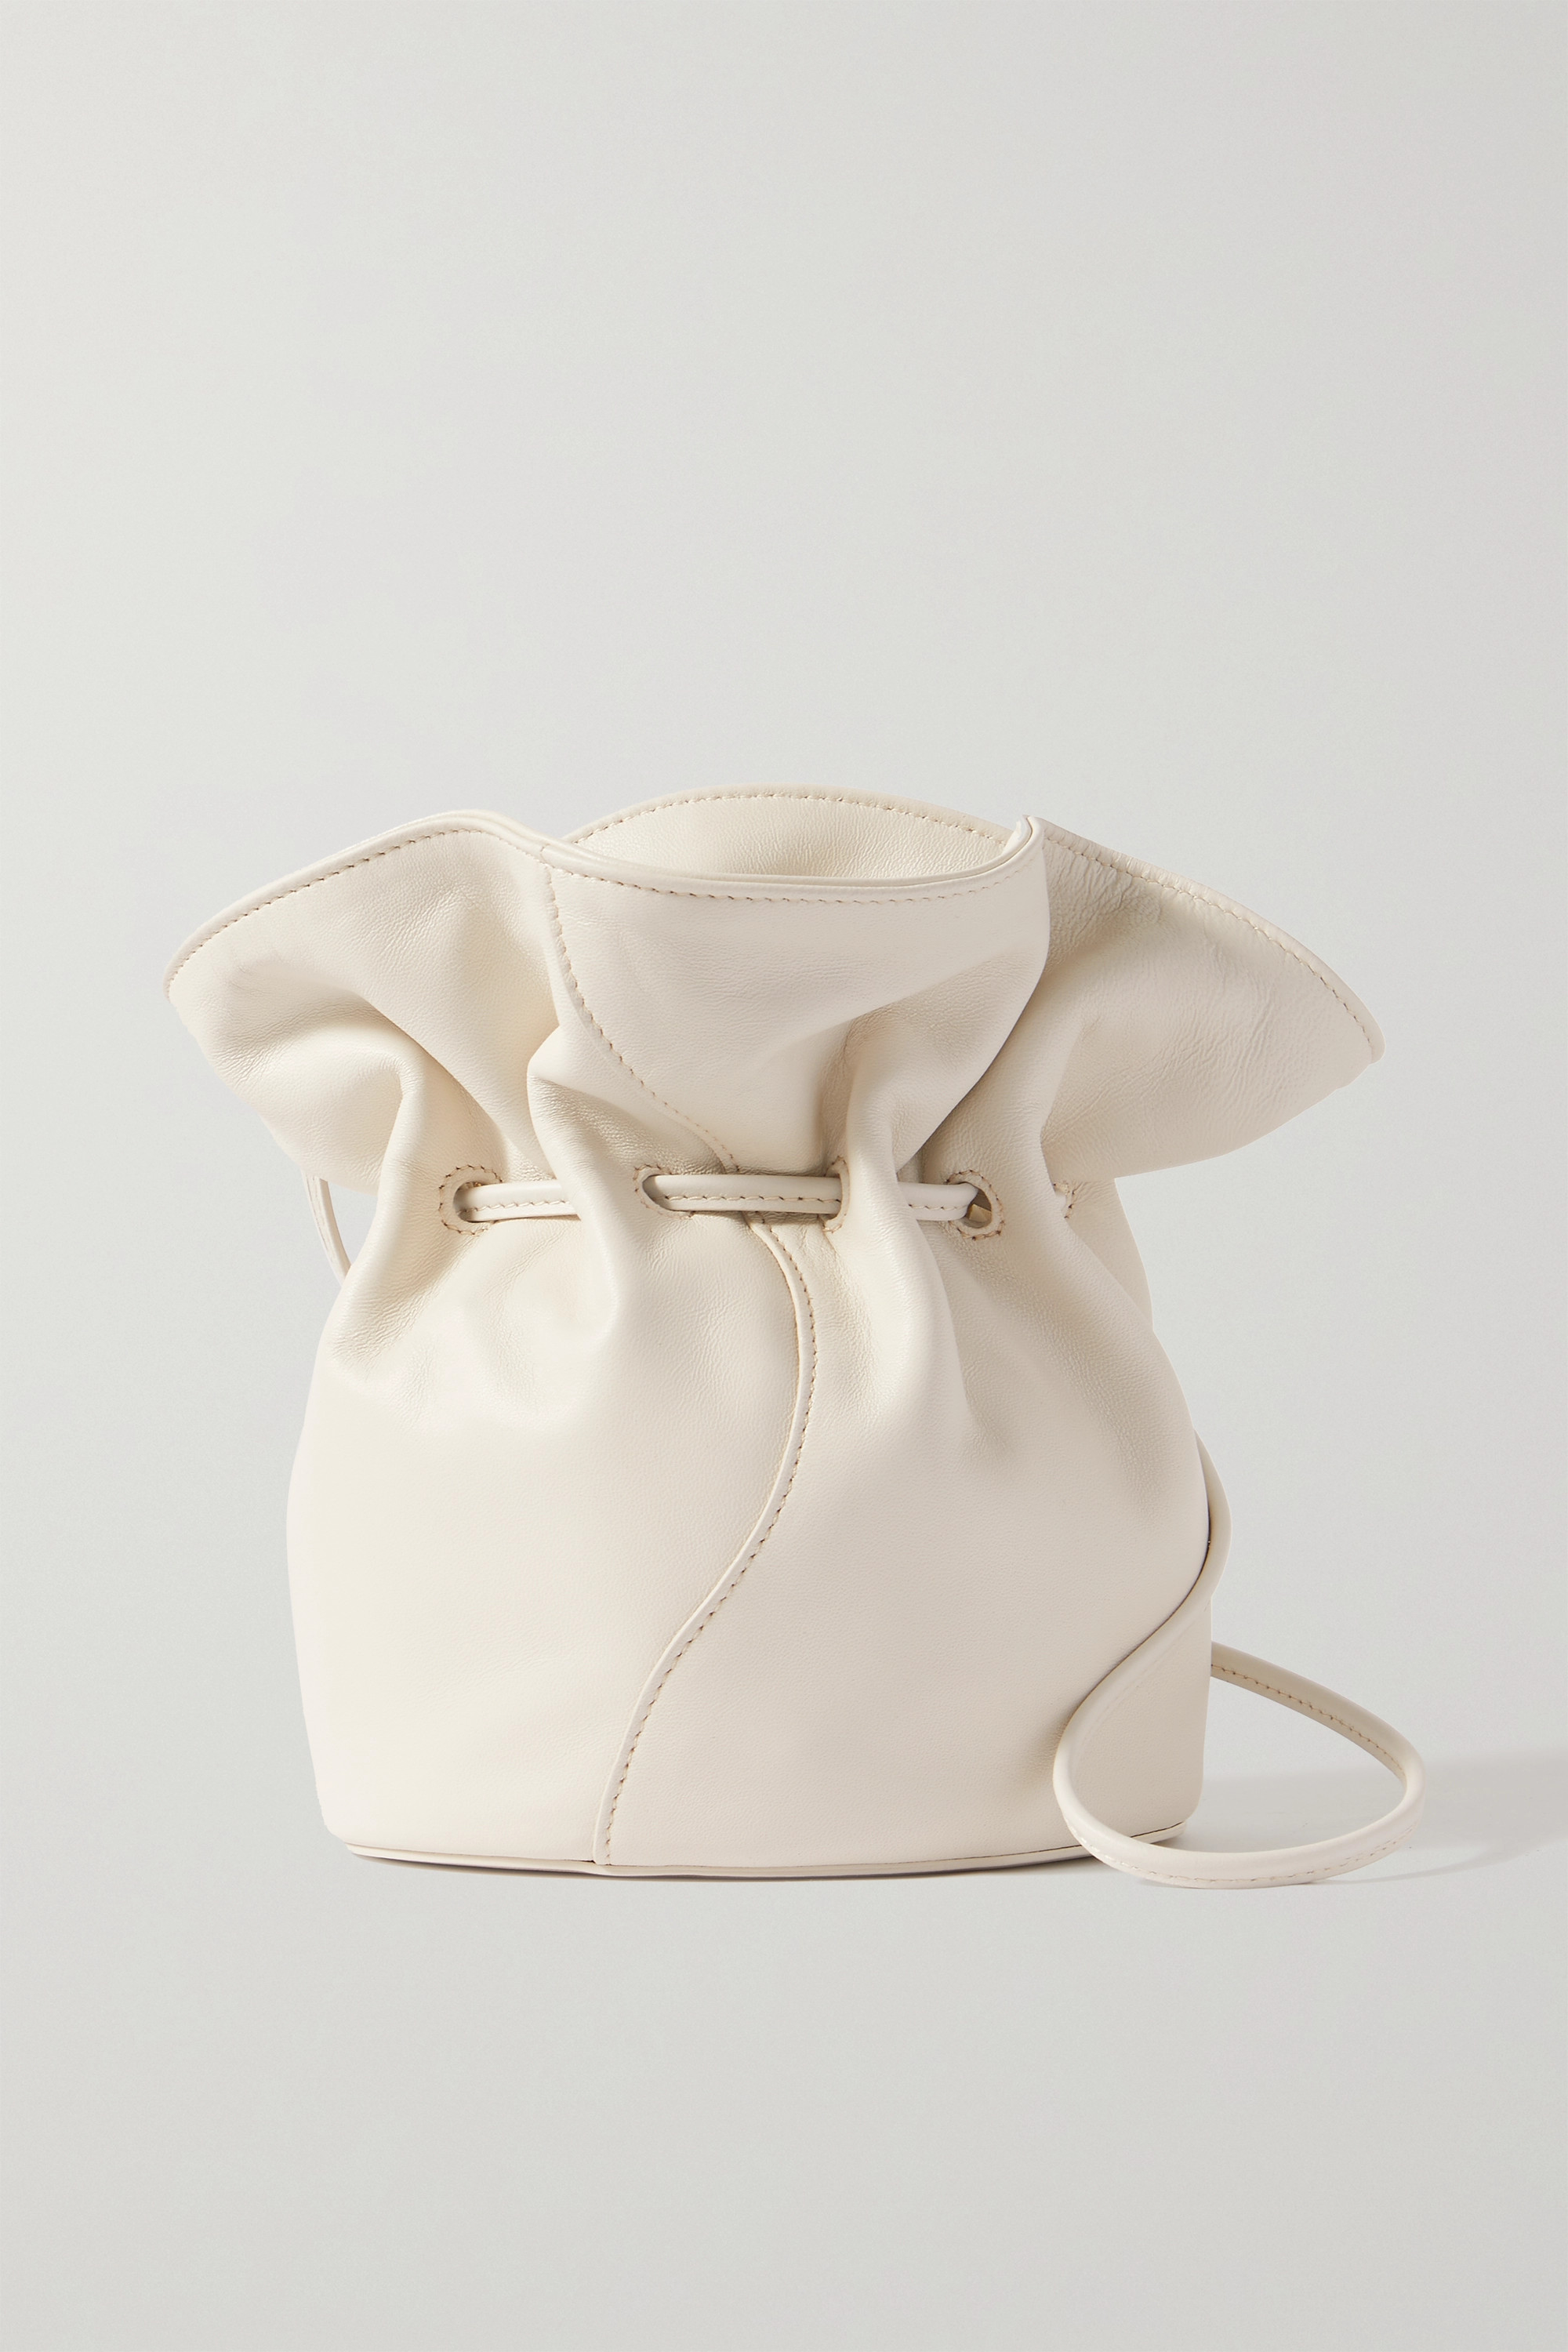 Côte d'Azur Strapped – Designer Clutch Bags